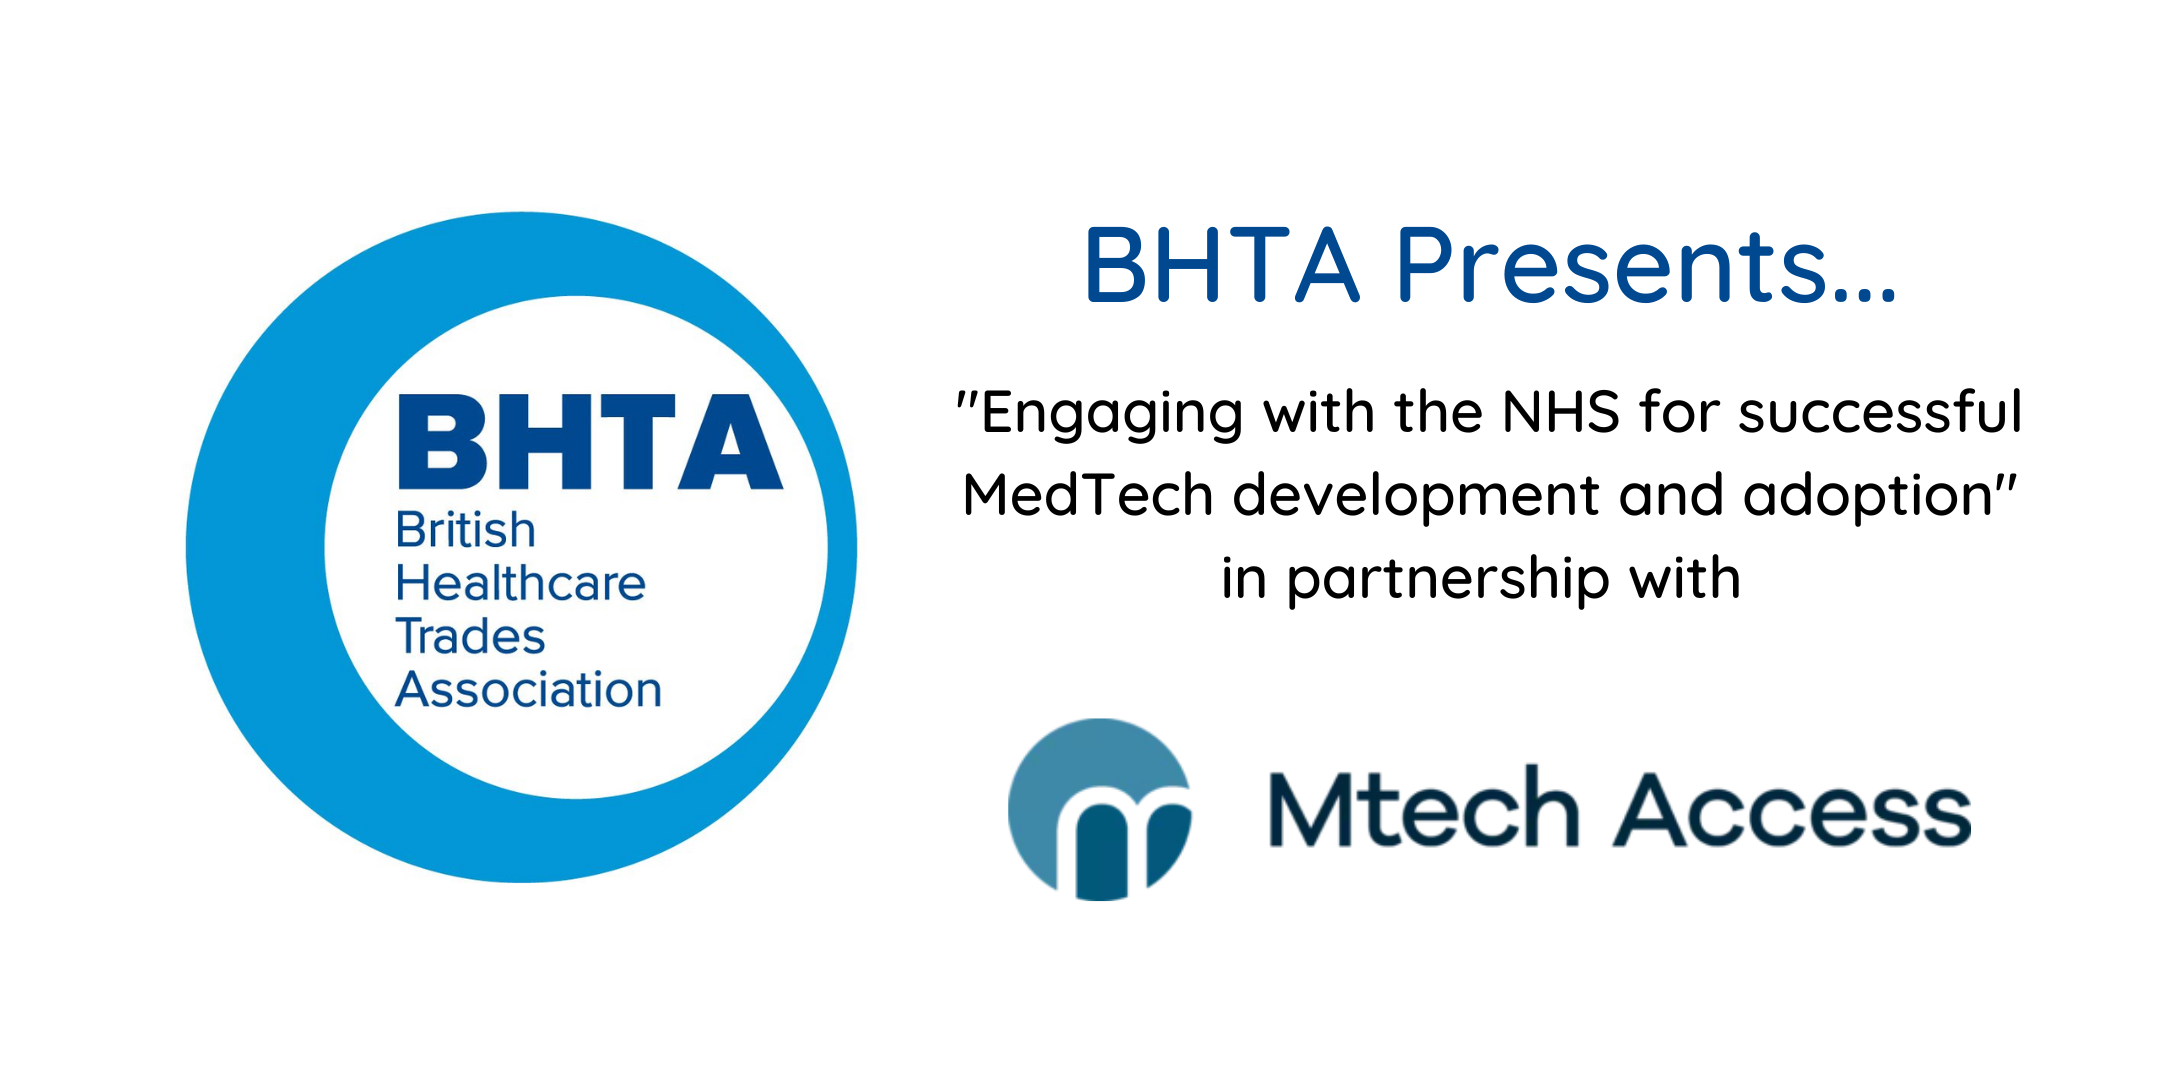 BHTA礼物... “与NHS合作，成功开发和采用医疗技术”